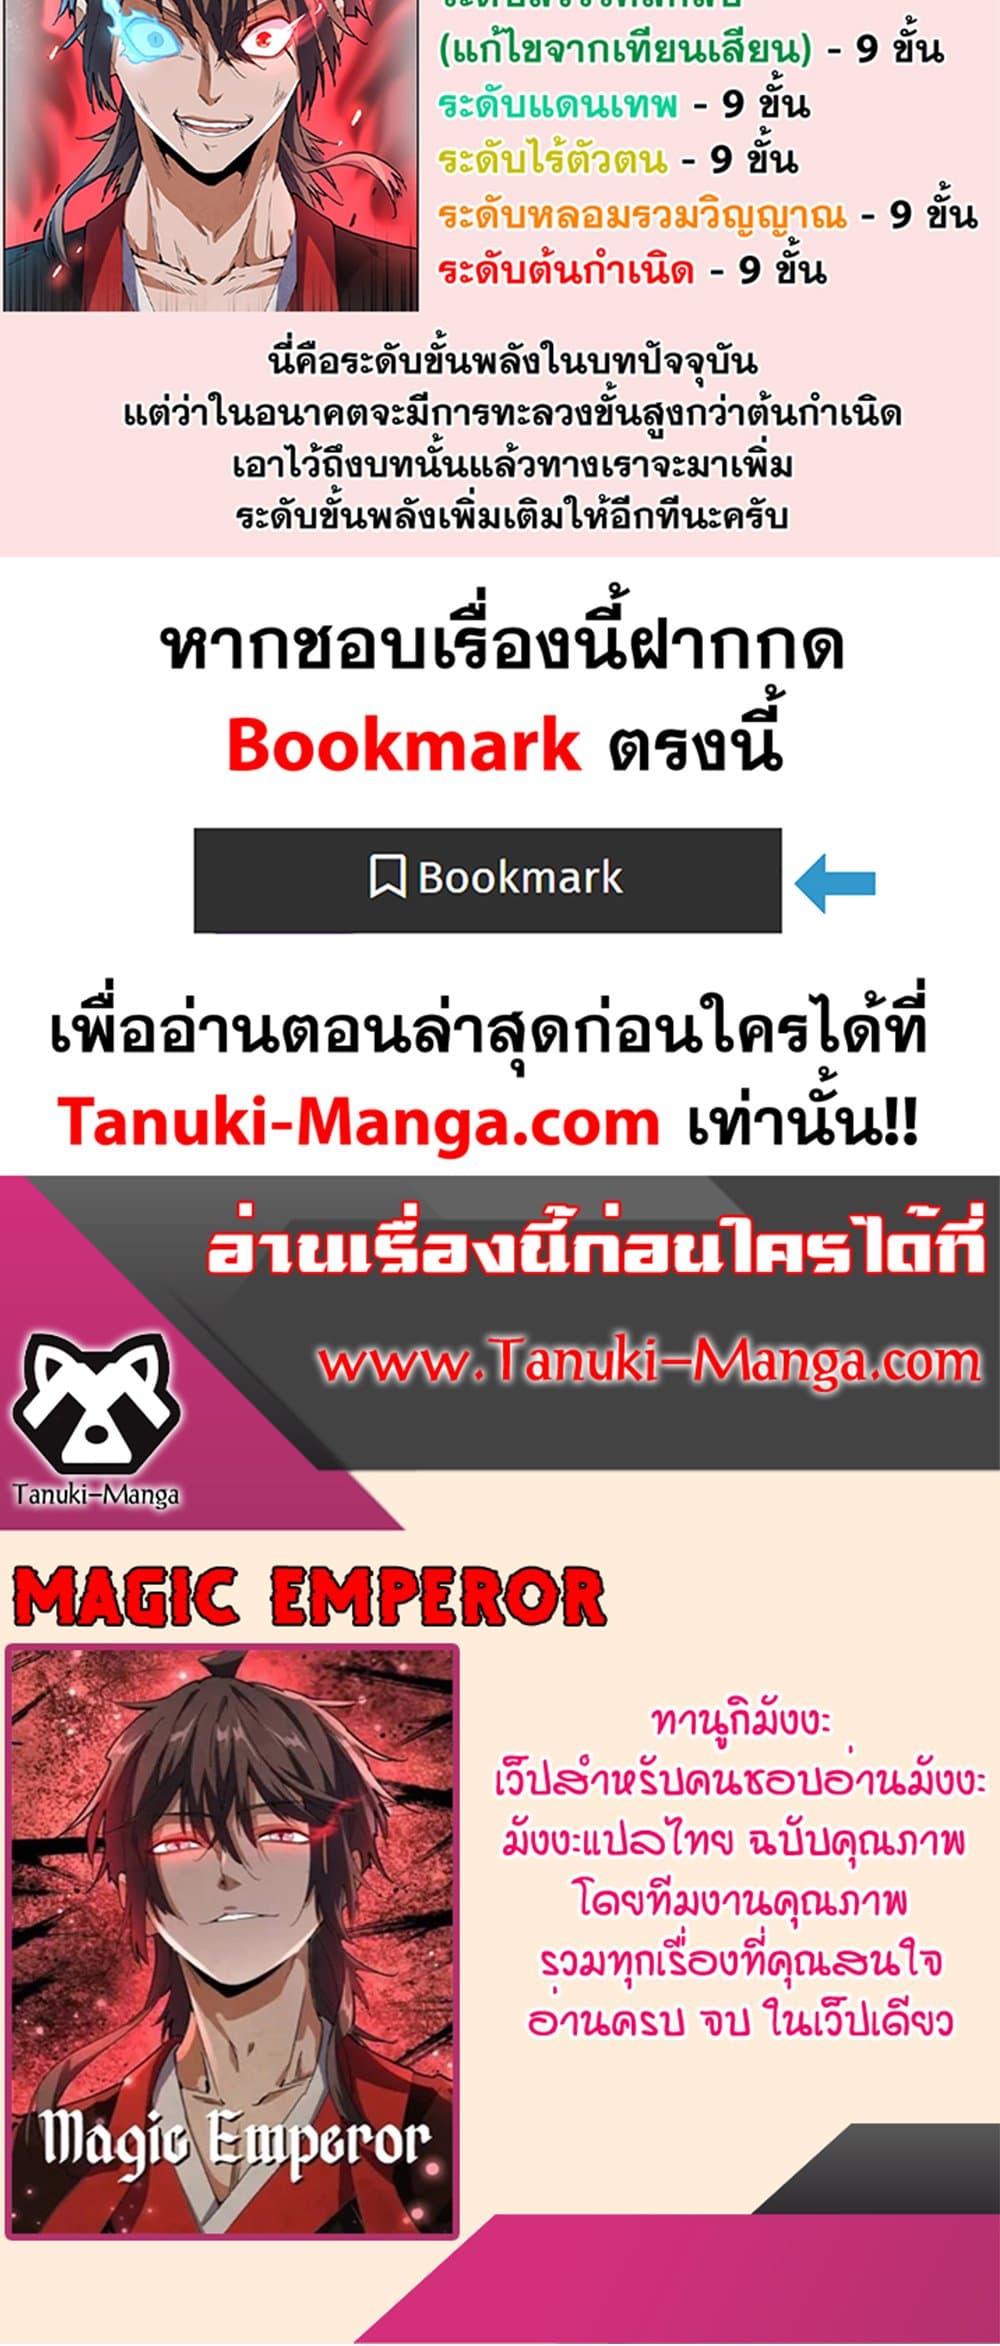 Magic Emperor 432 40